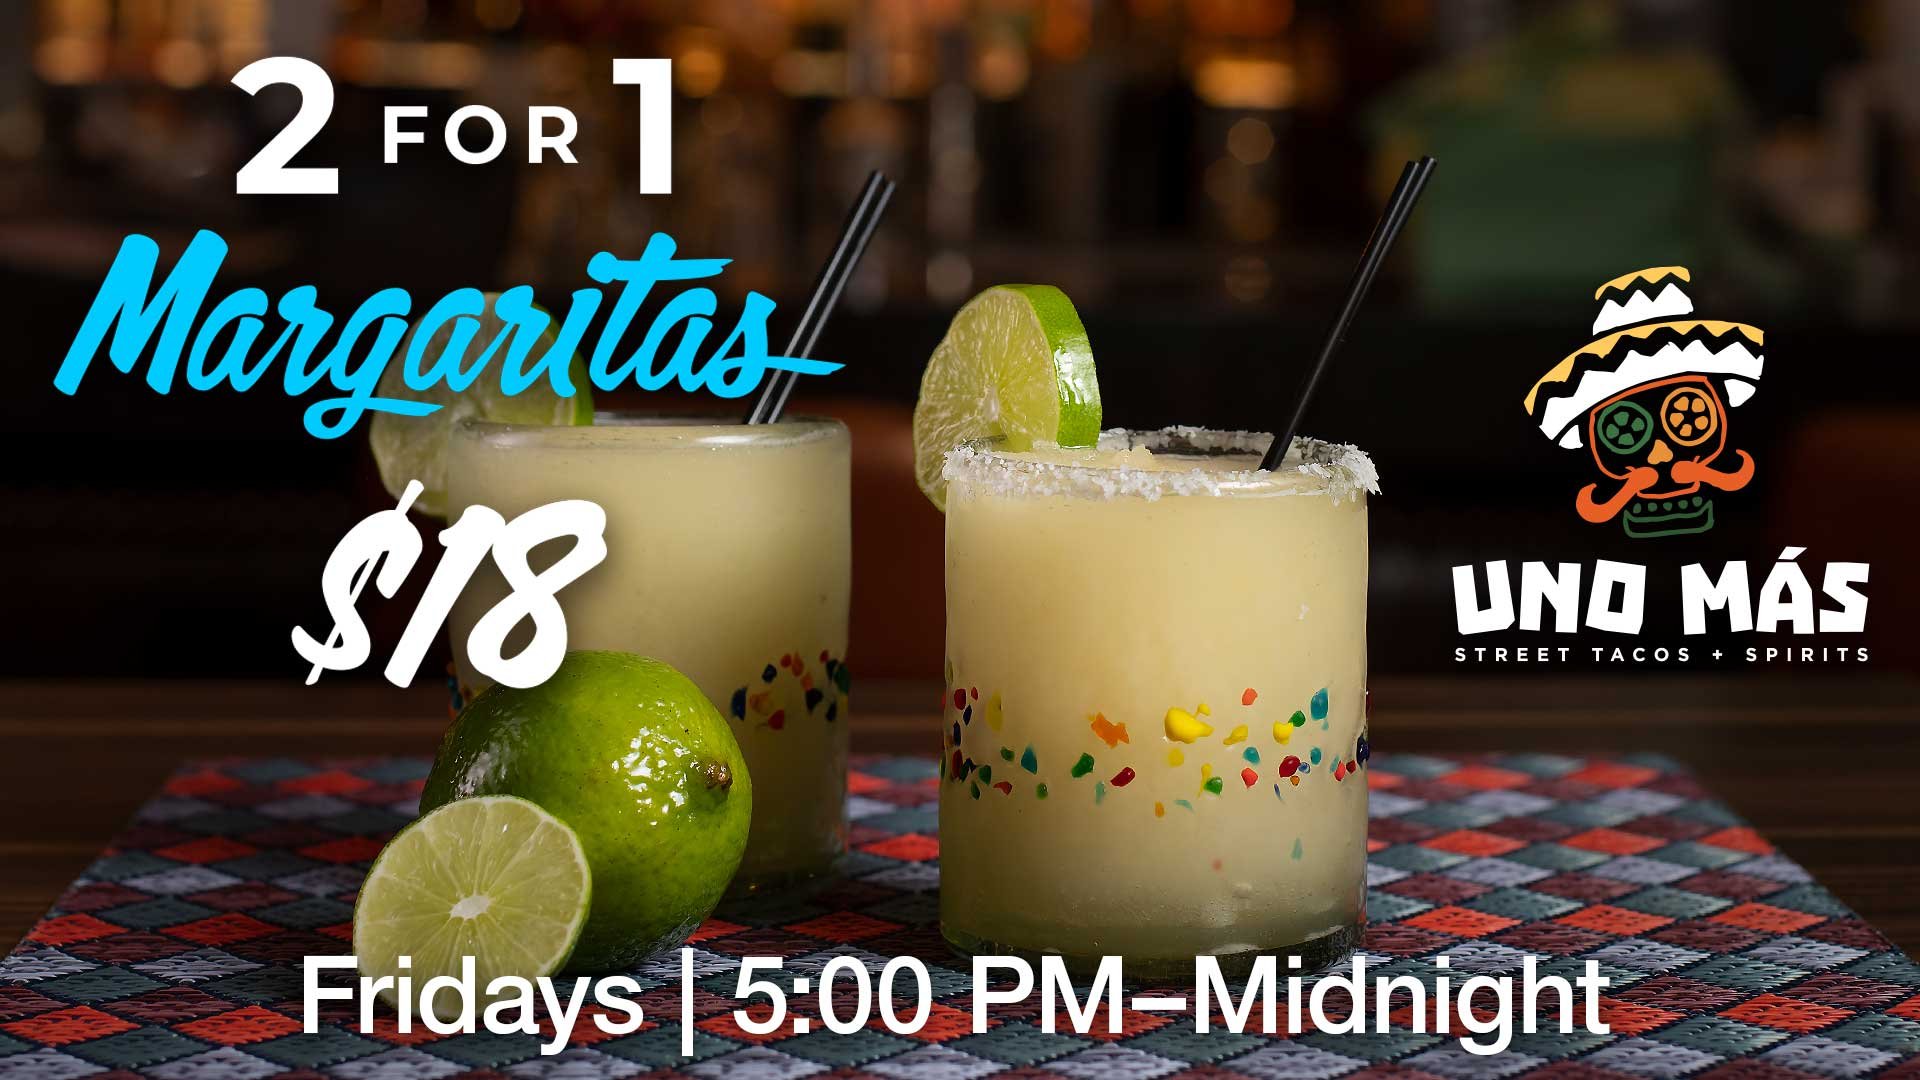 Uno-Mas-2-for-1-Margaritas-18-dollars-promo-ad_v01_1920x1080